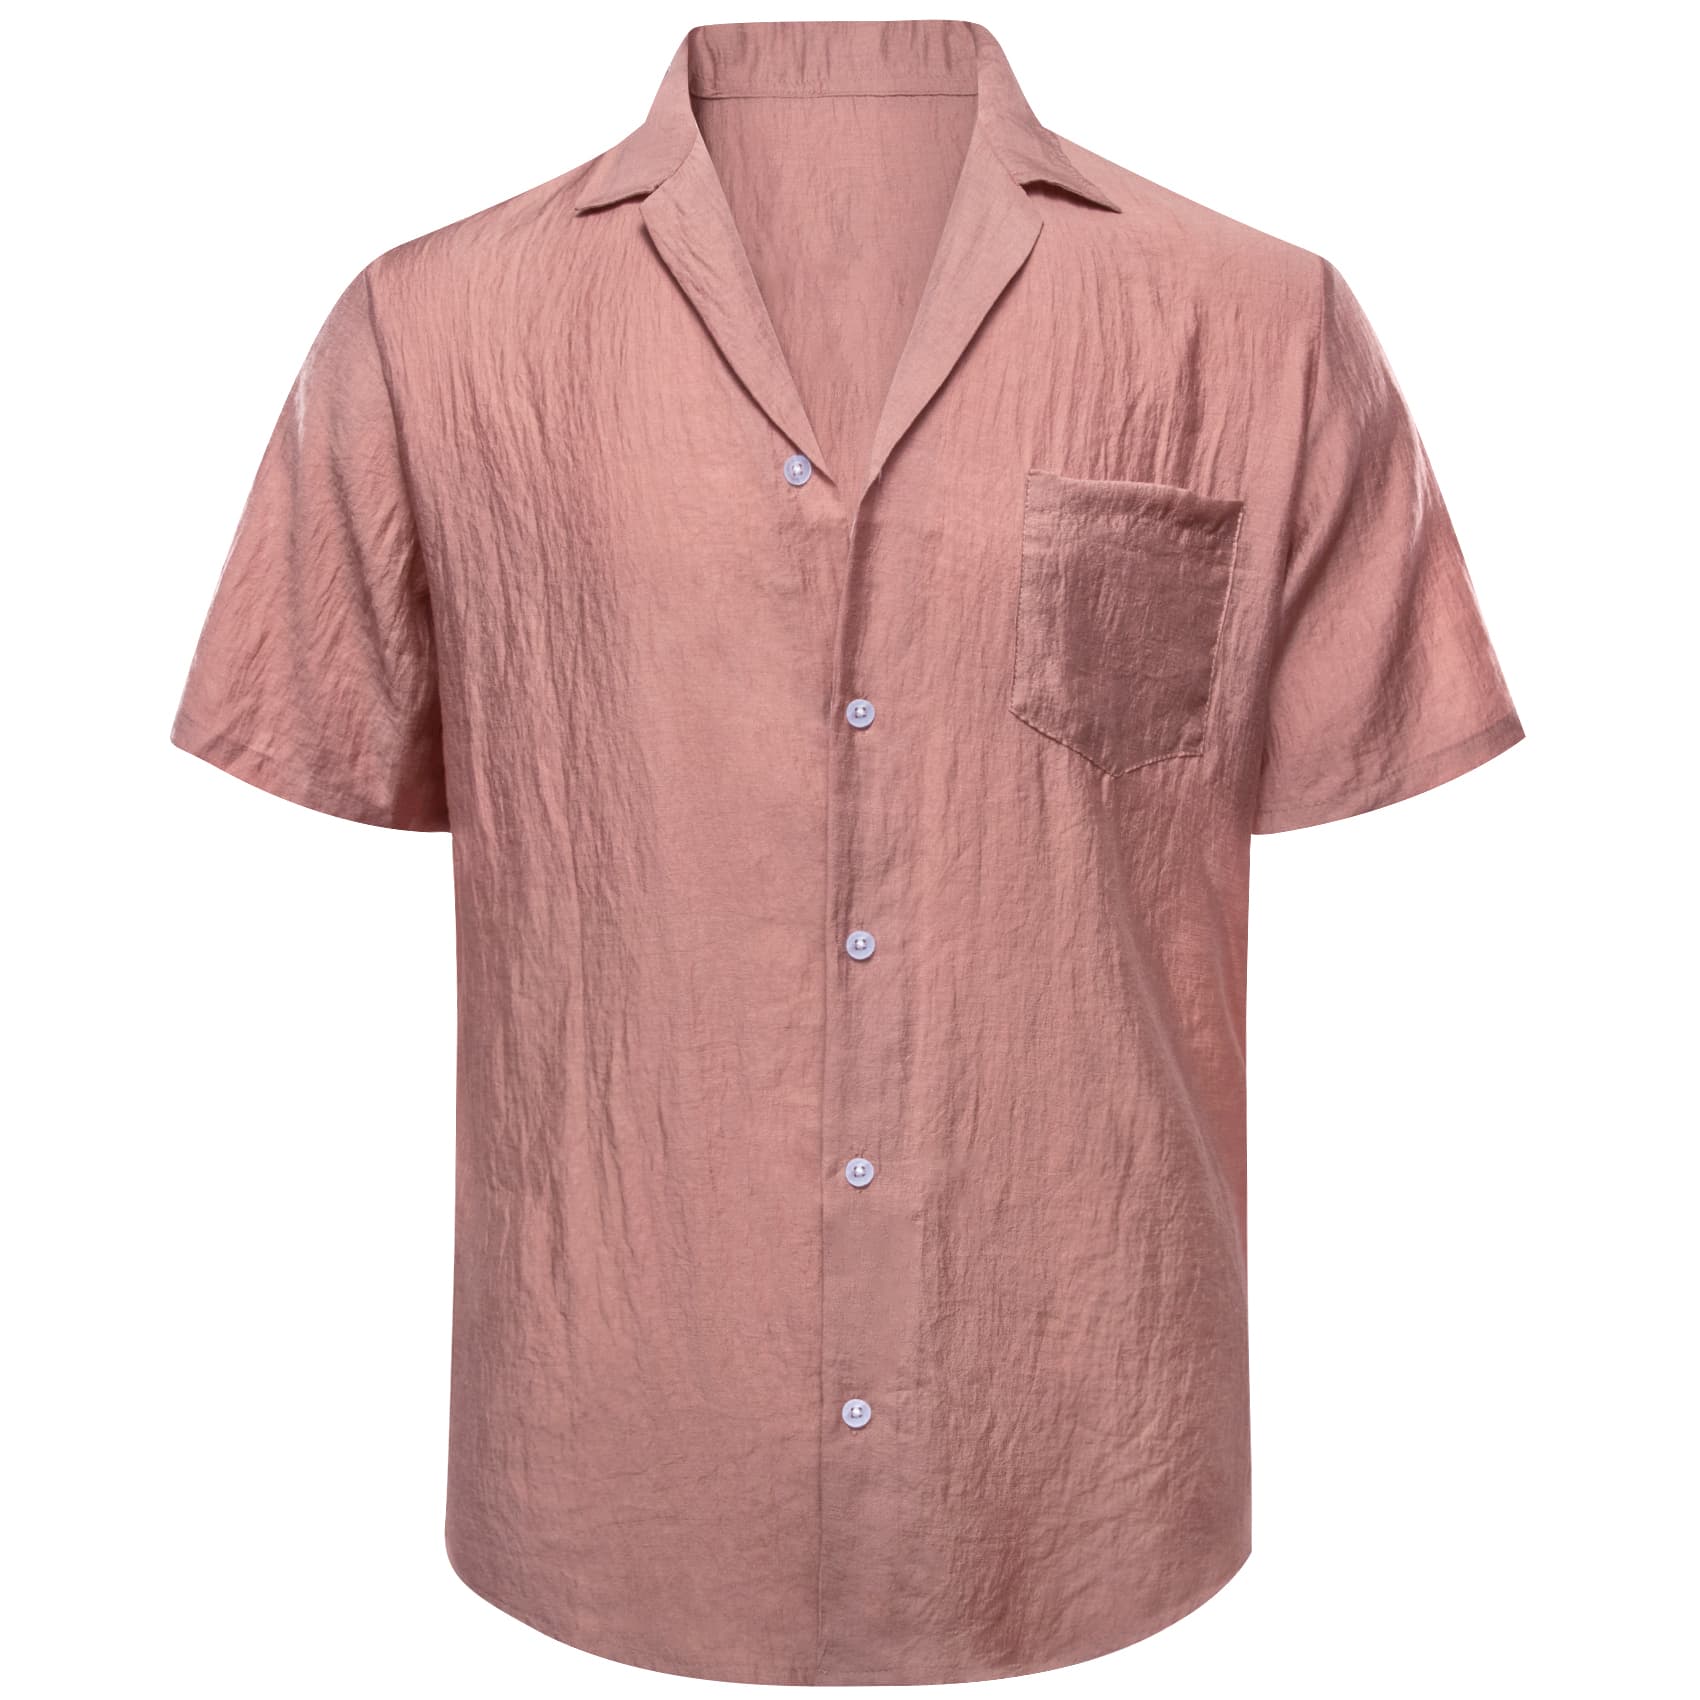 men's performance short sleeve button down pinl casul pink shirts